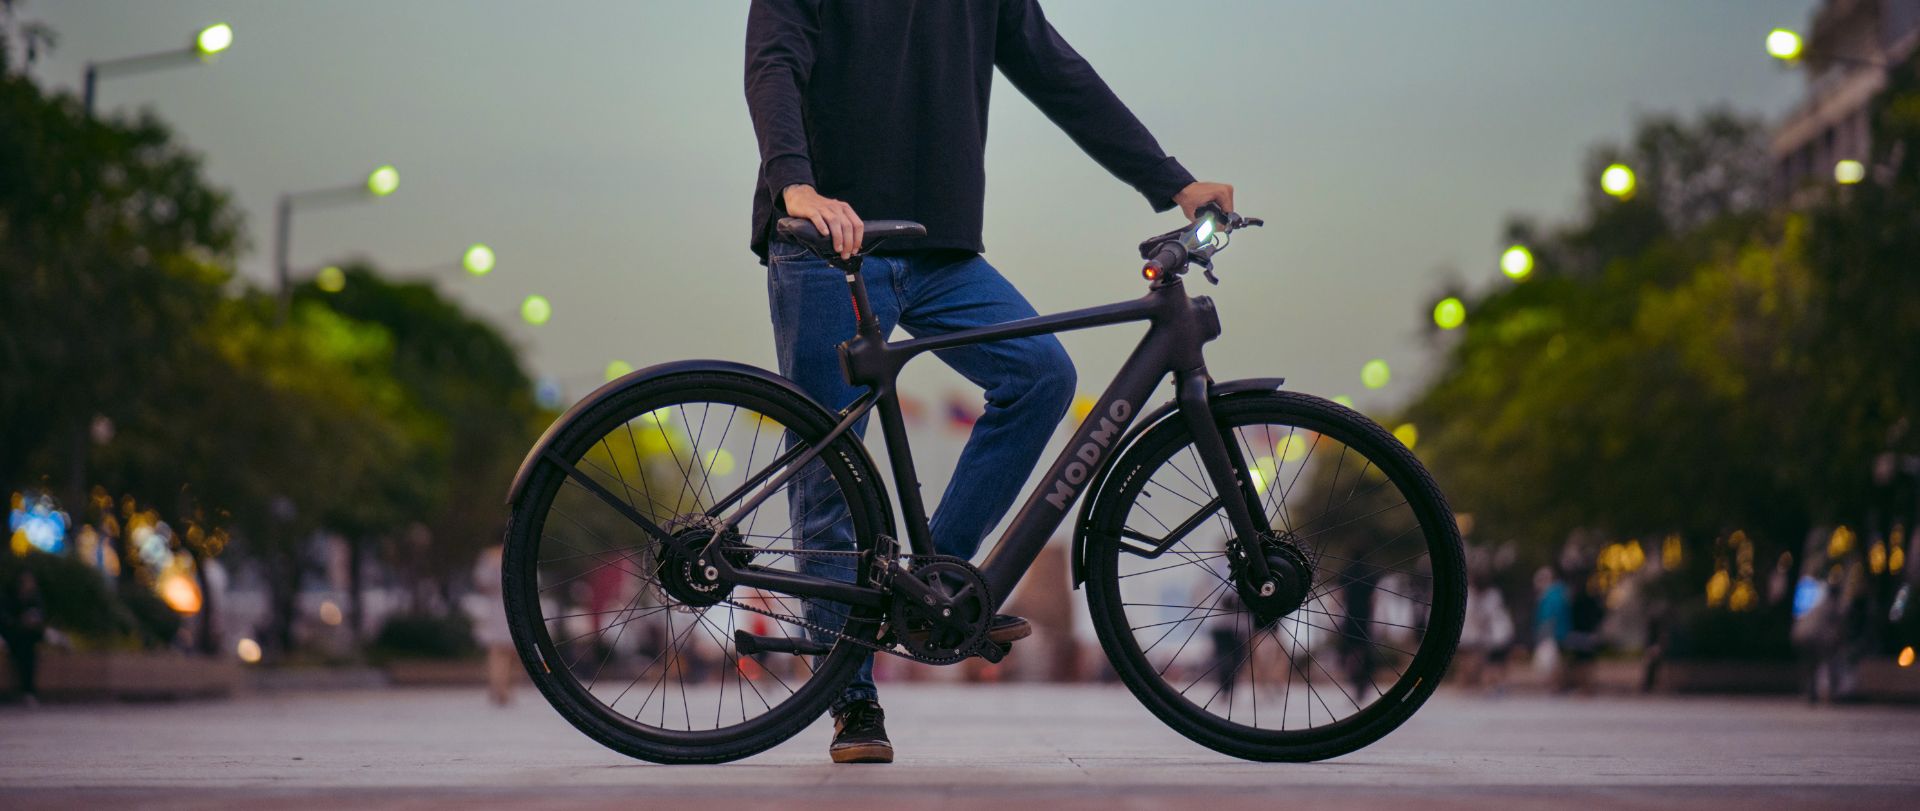 Modmo Saigon+ Electric Bicycle - RRP £2800 - Size M (Rider: 155-175cm) - Image 14 of 19